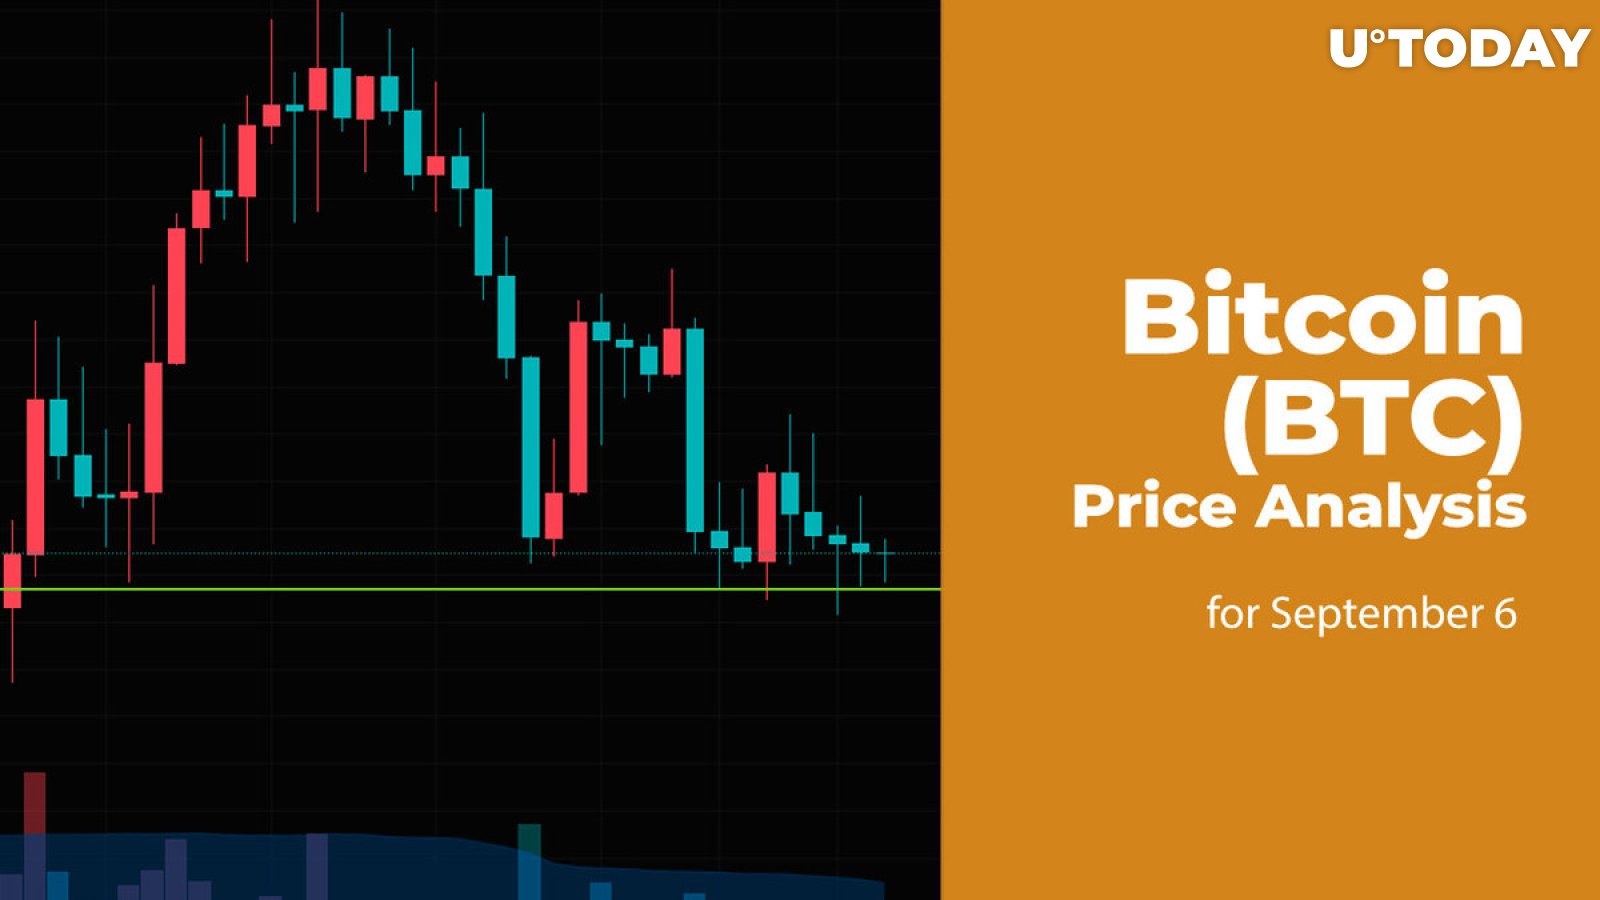 Bitcoin (BTC) Price Analysis for September 6